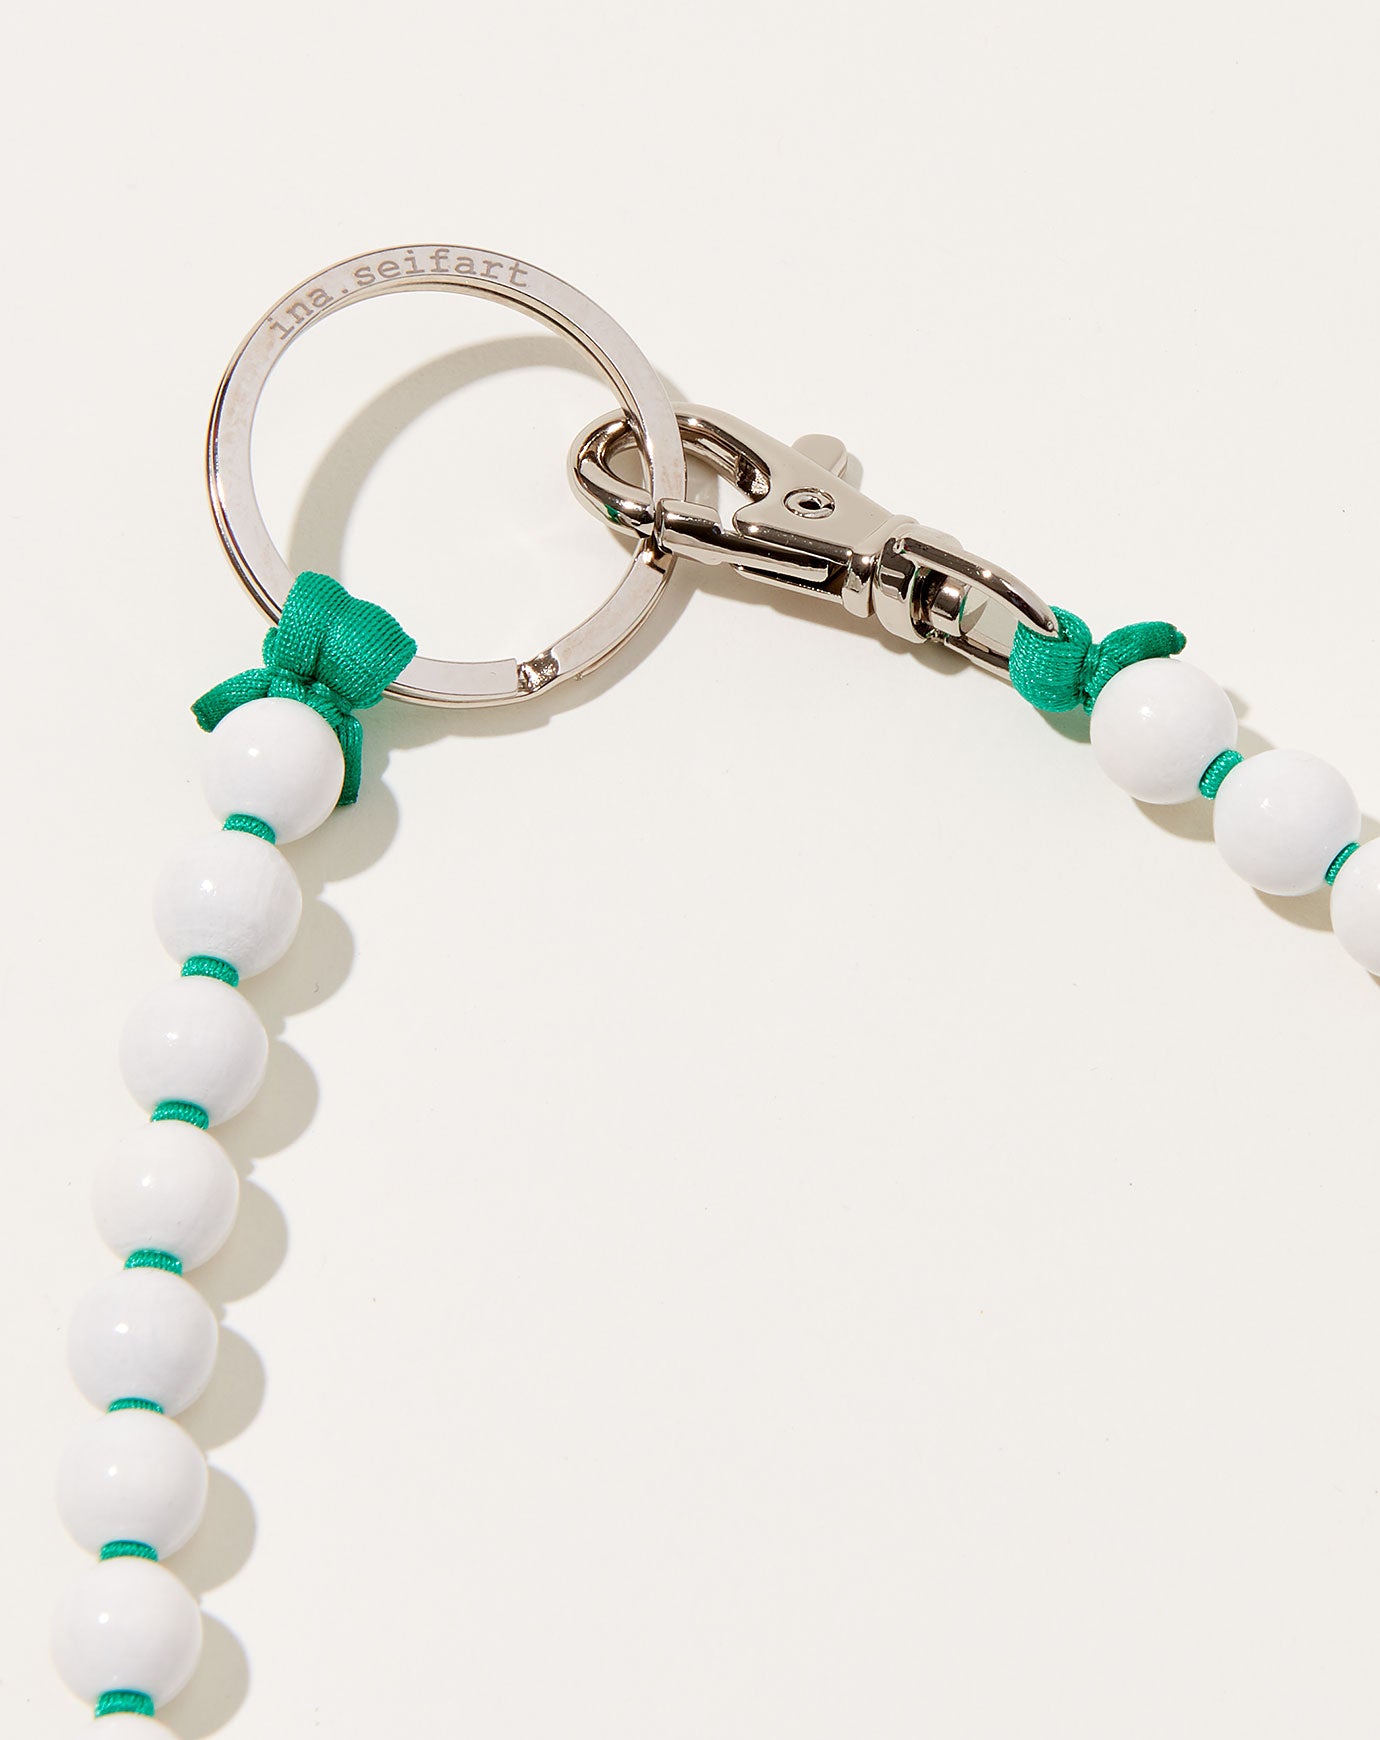 Ina Seifart Perlen Long Keyholder in White on Green